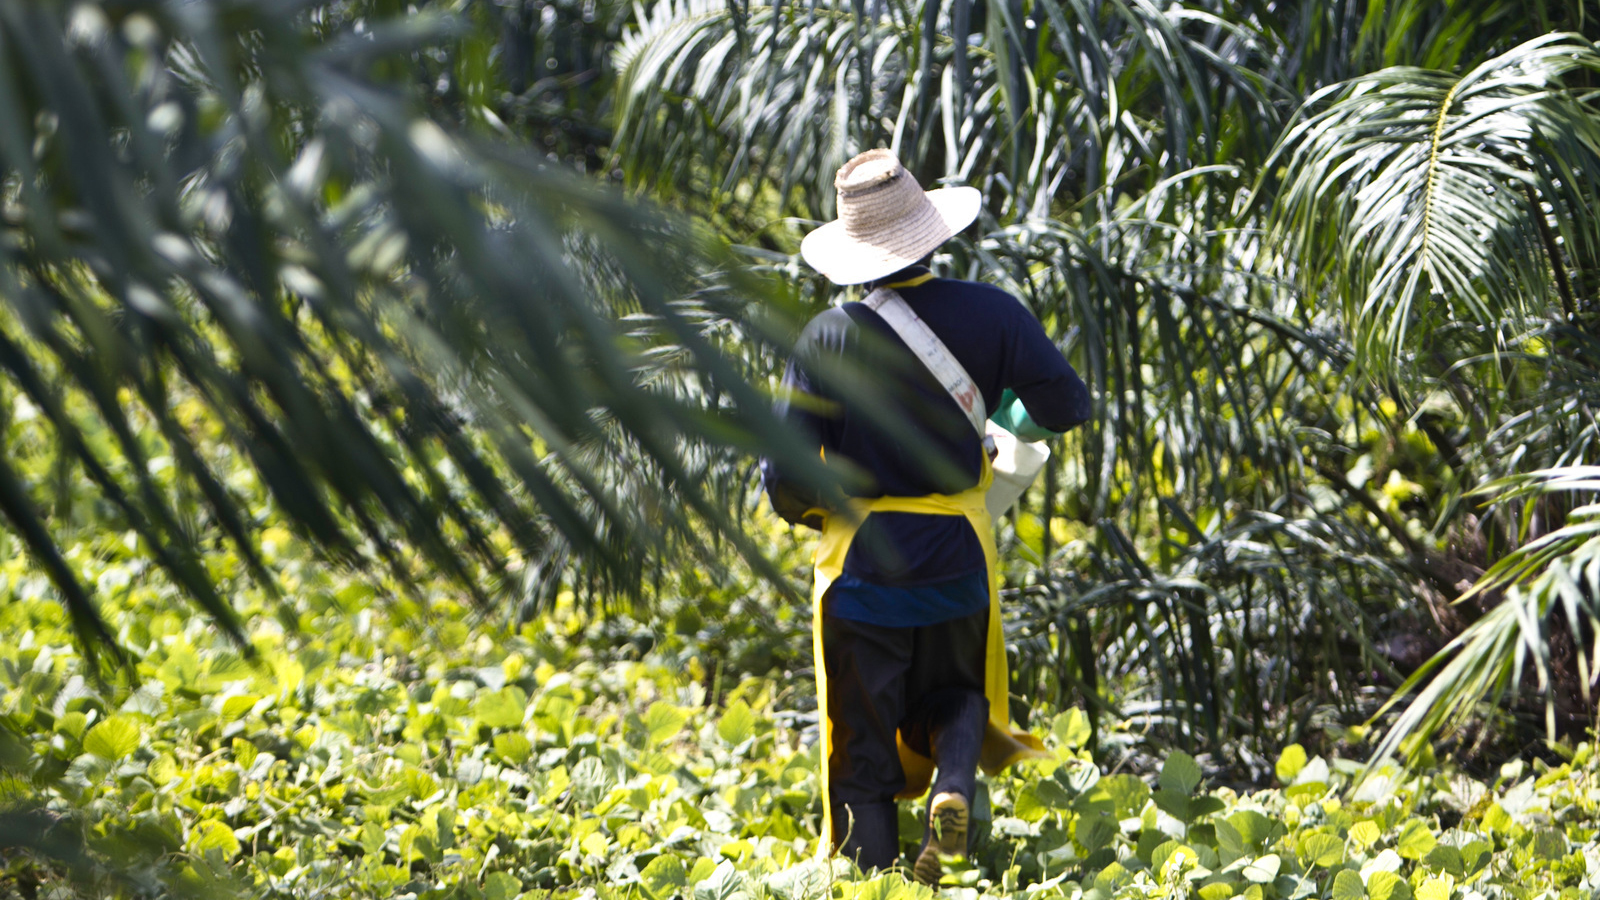 Palm oil farm working toward sustainability. Photo © Erika Nortemann/TNC